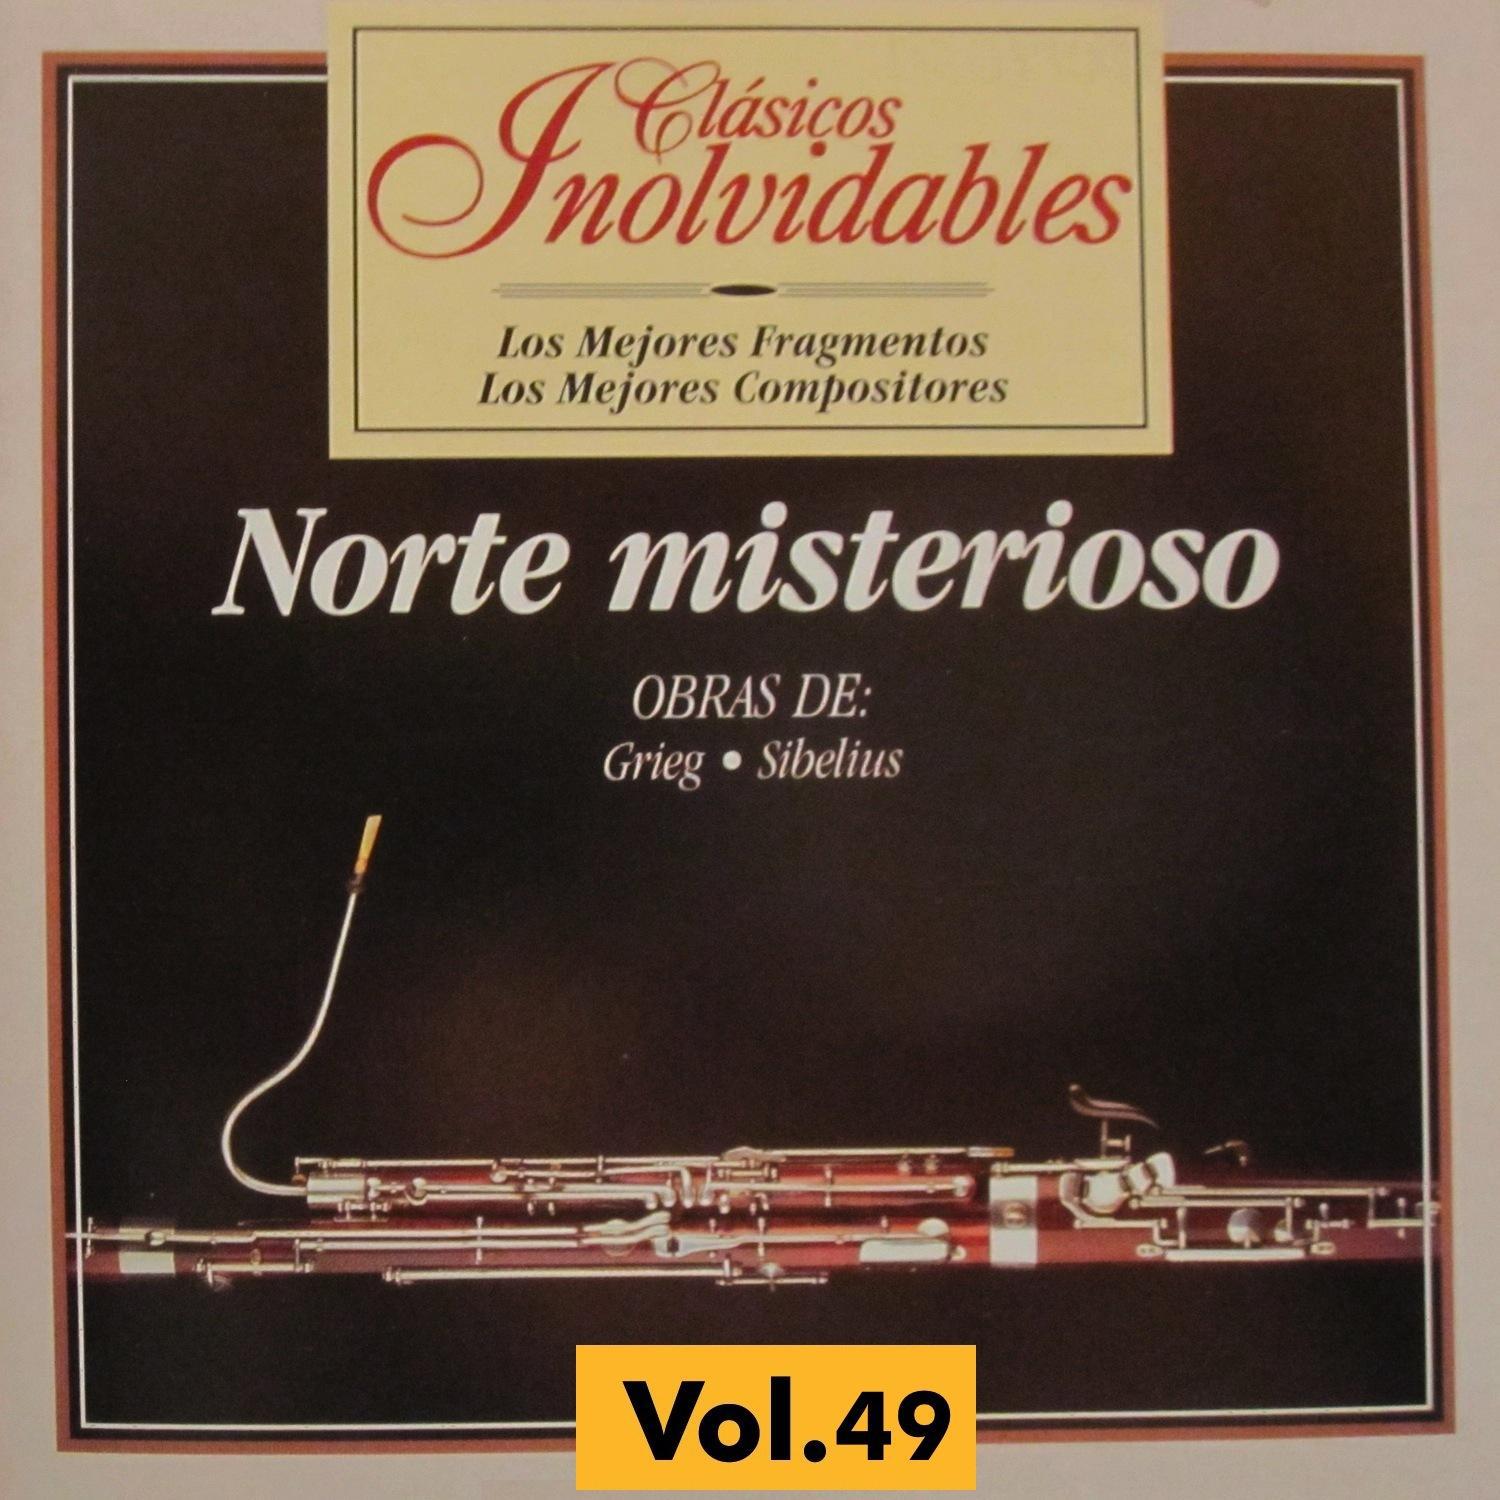 Clásicos Inolvidables Vol. 49, Norte Misterioso专辑